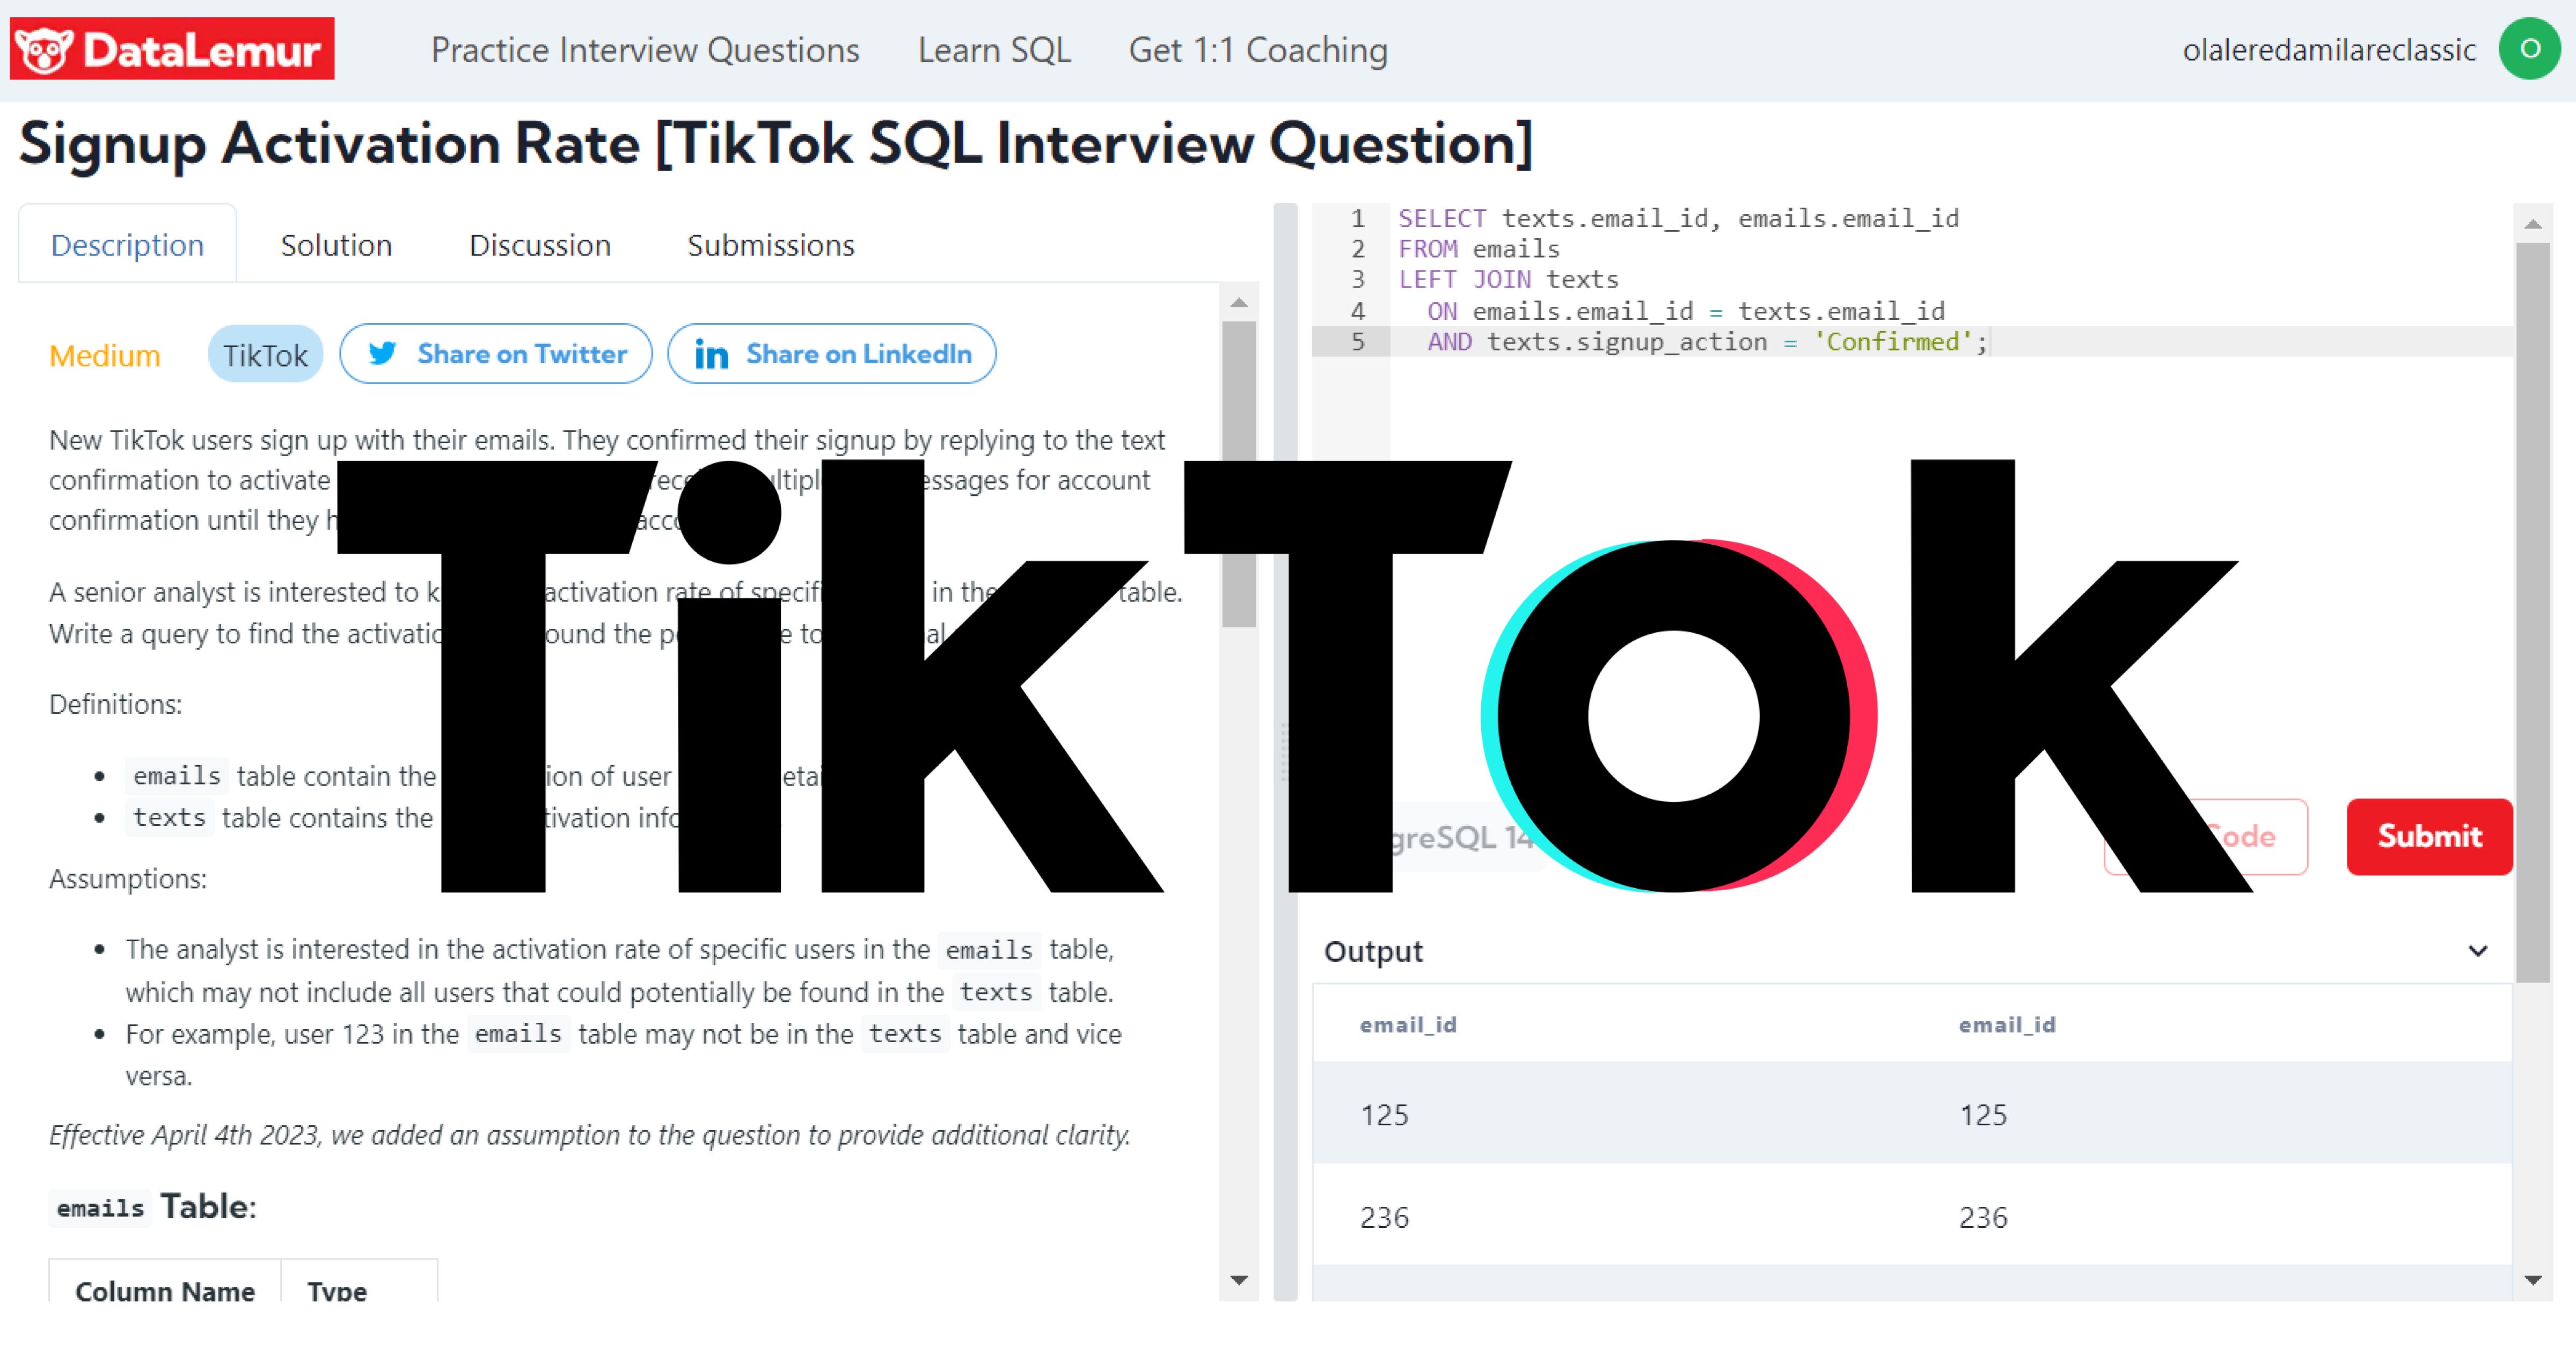 TikTok SQL Interview Question